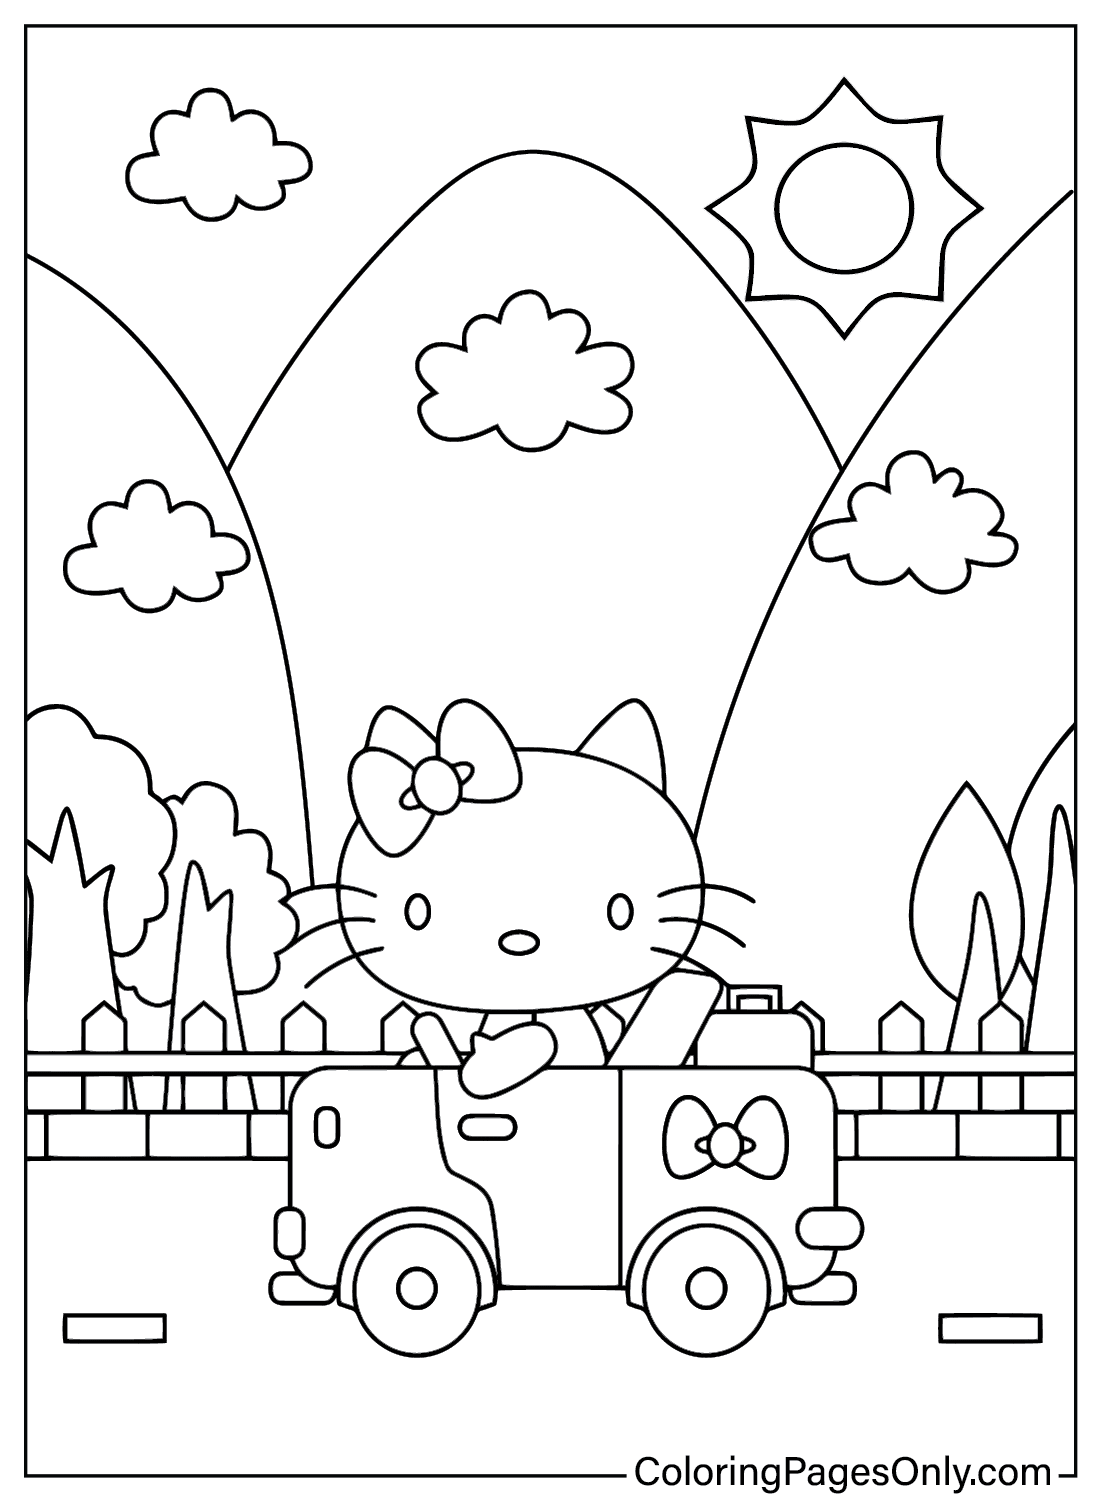 Página para colorir da Hello Kitty para imprimir